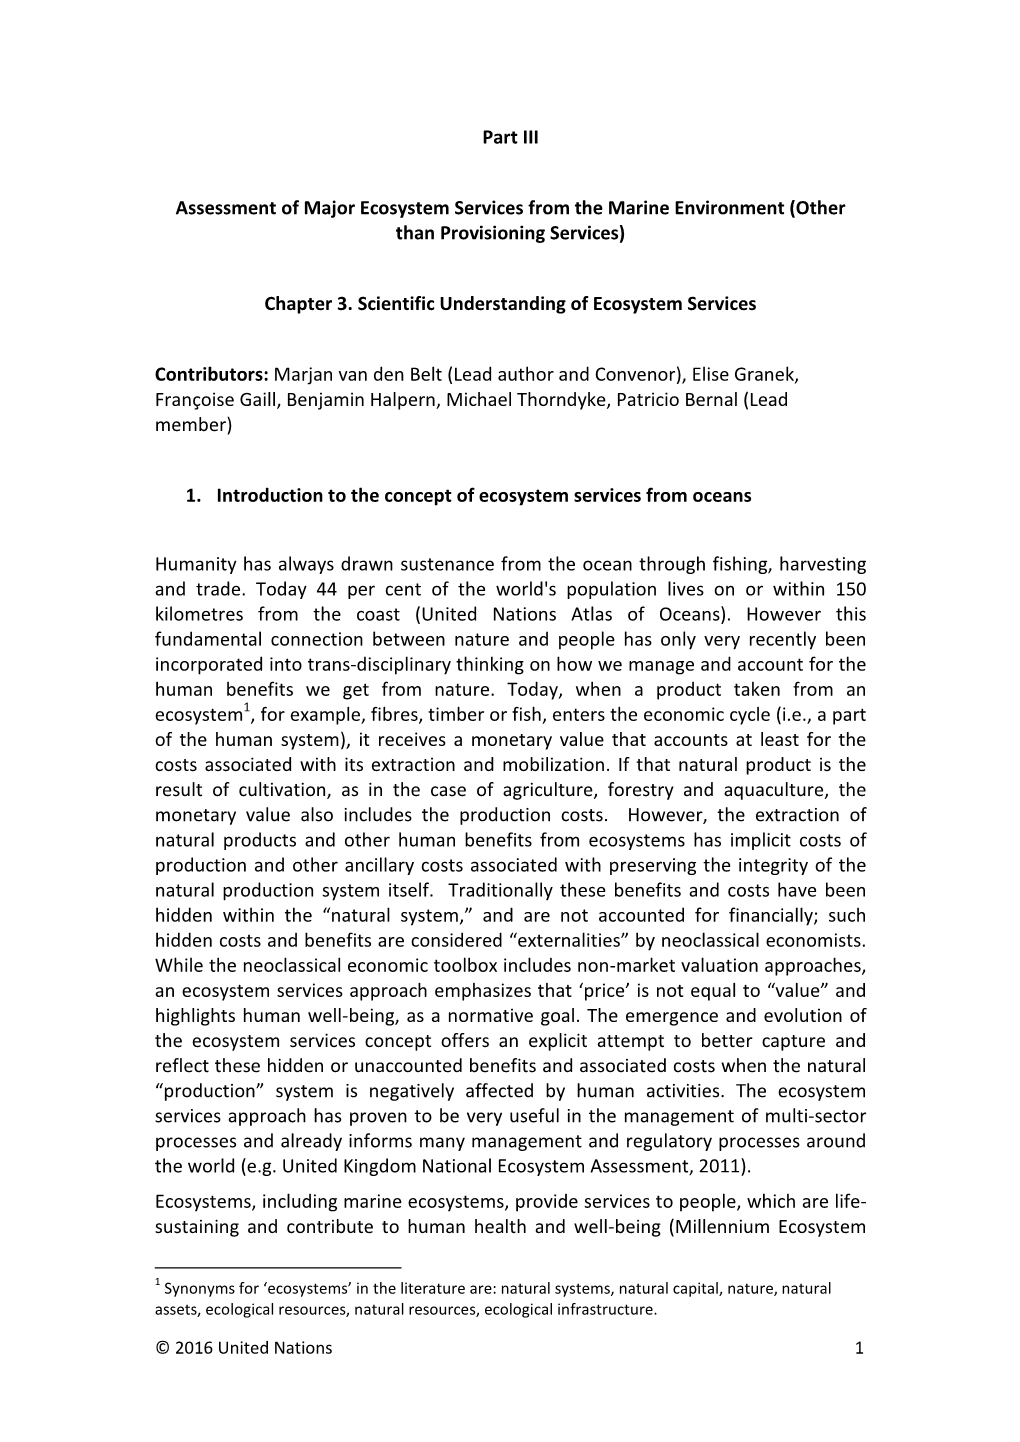 Chapter 3 Scientific Understanding of Ecosystem Services